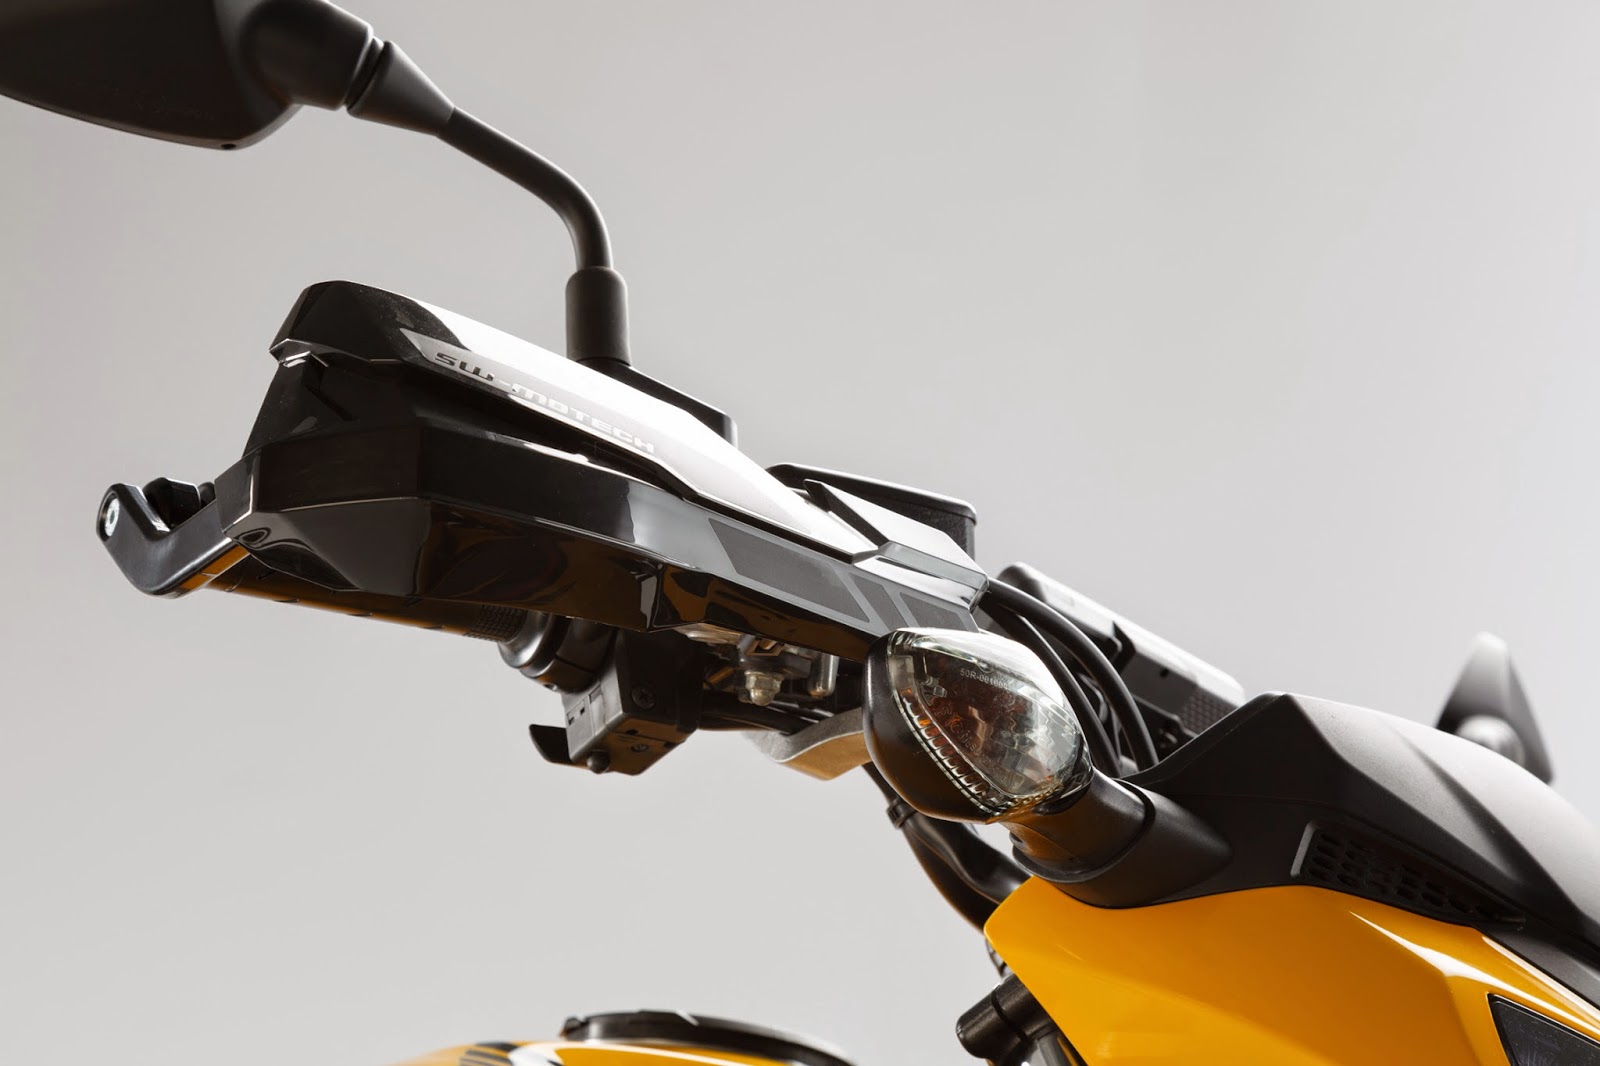 New: SW Motech accessories for Honda CB650F